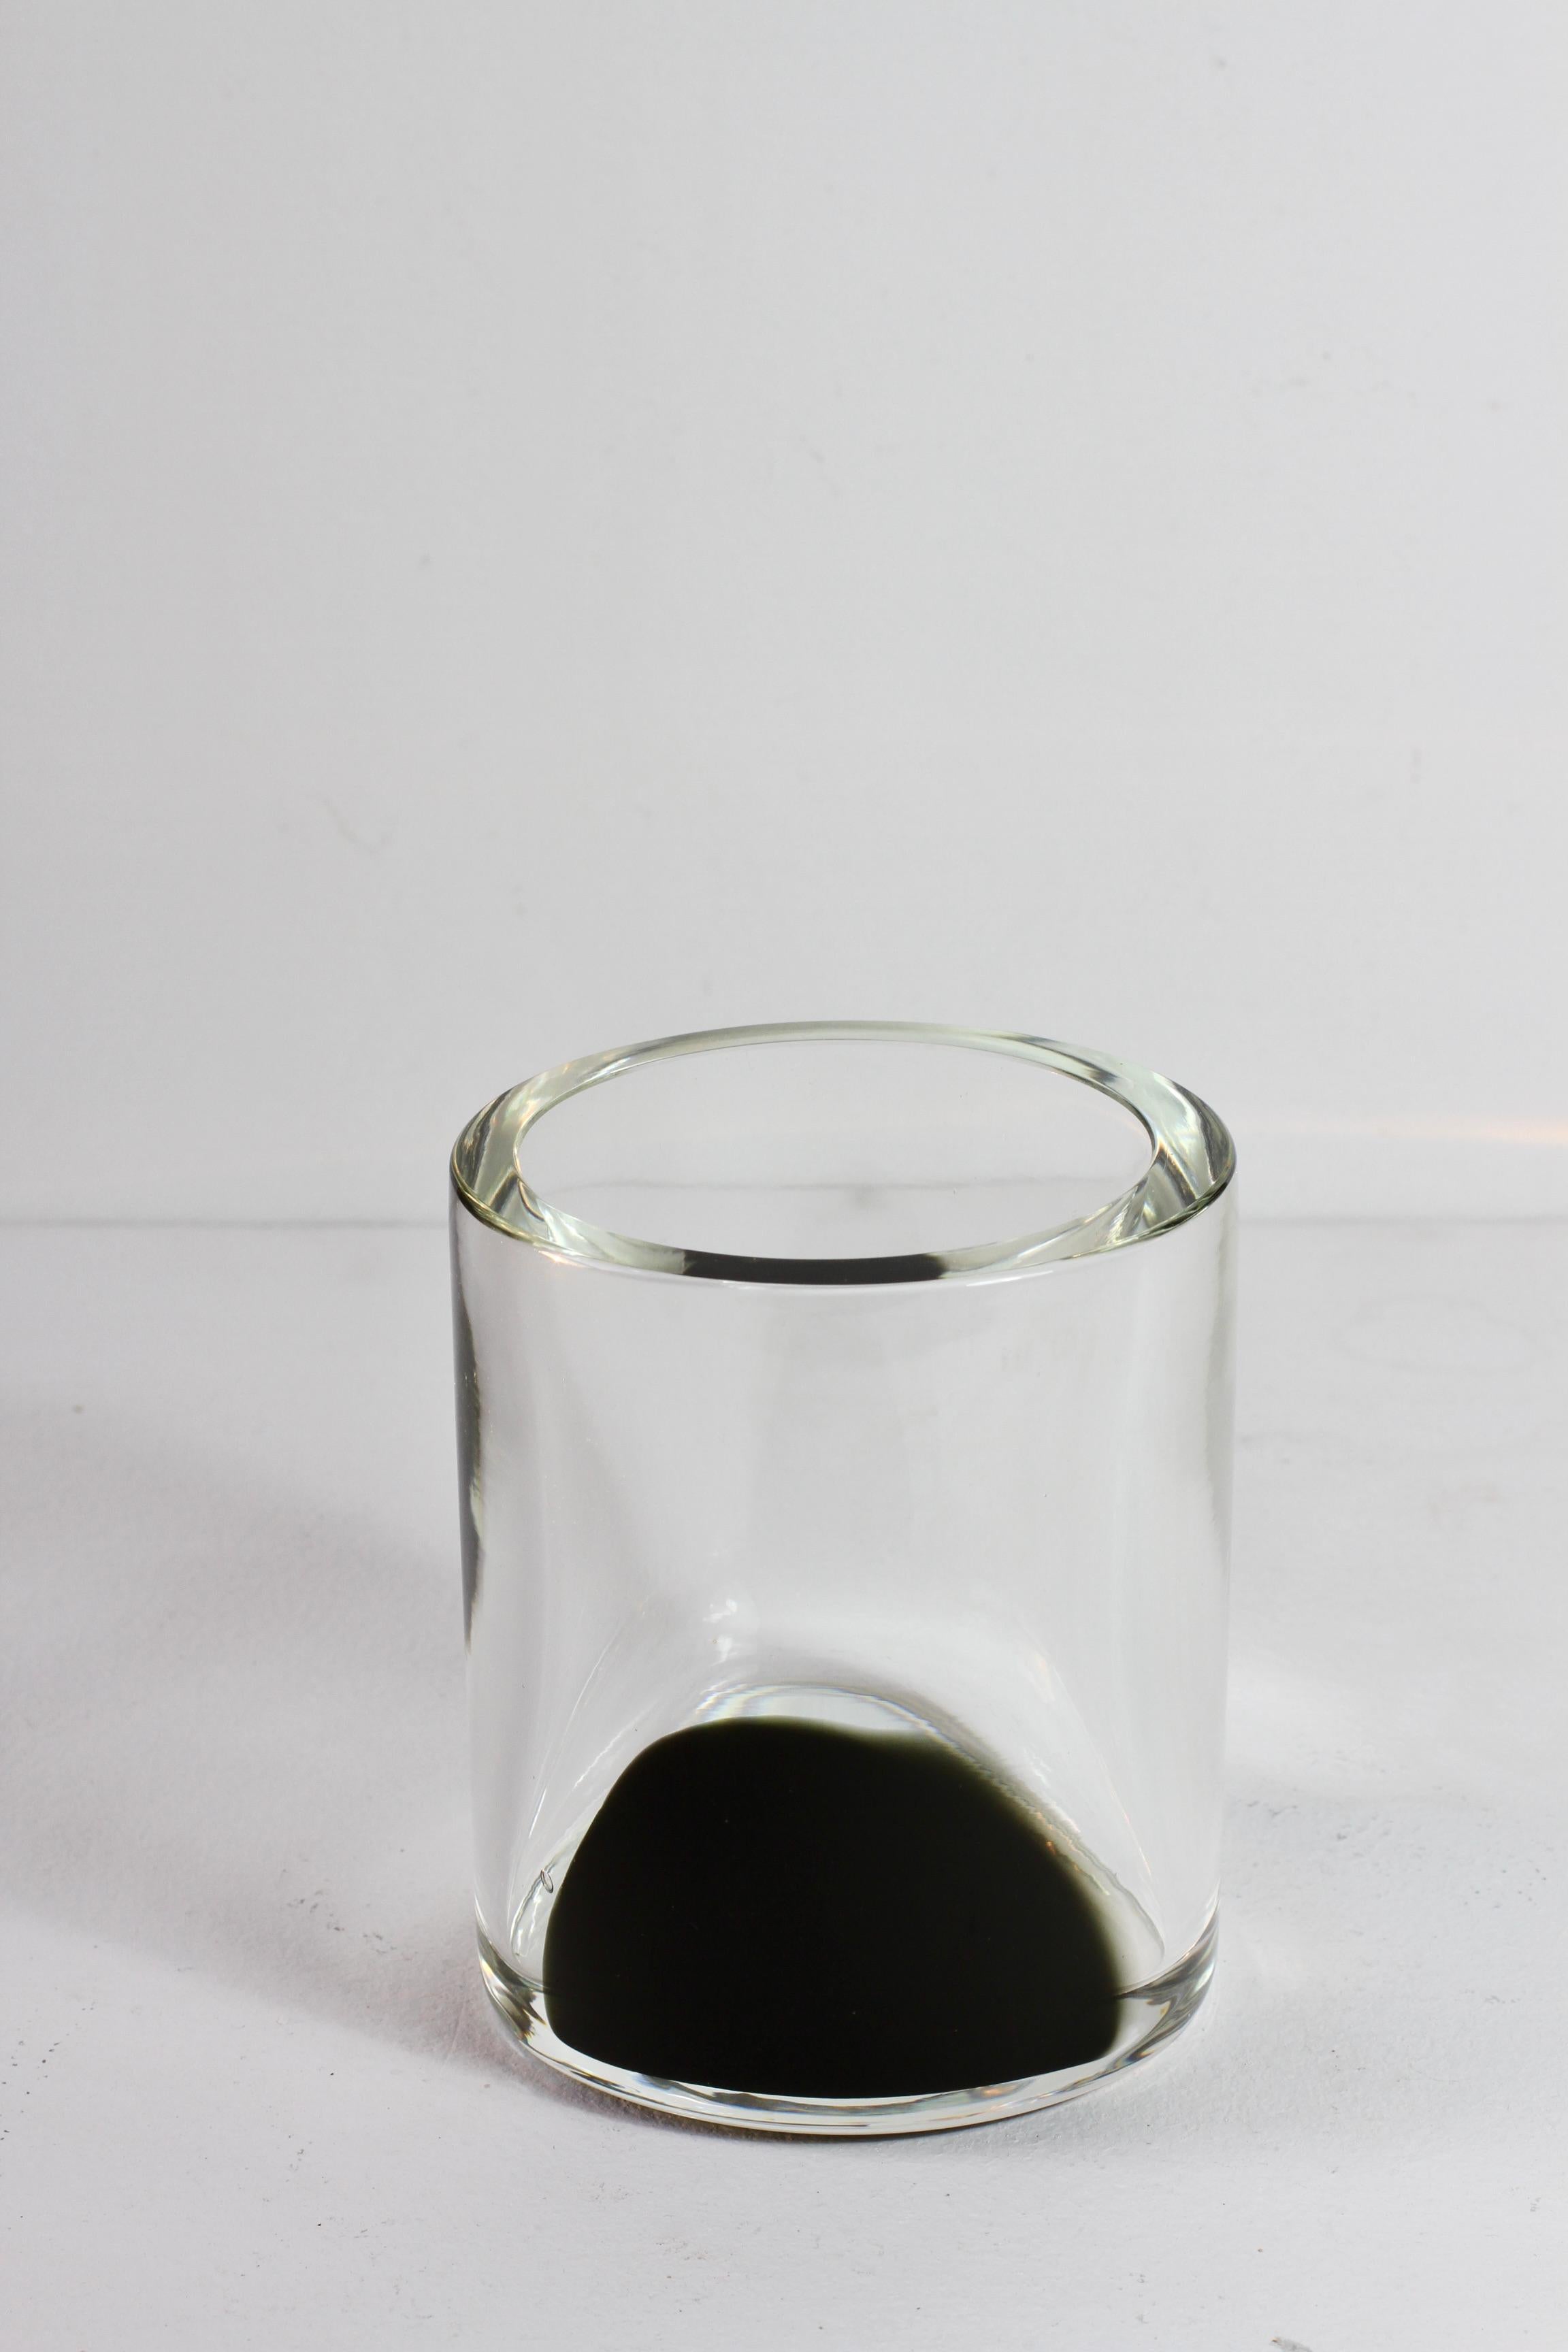 Antonio Da Ros for Cenedese 1970s Italian Round Black & Clear Murano Glass Vase For Sale 3